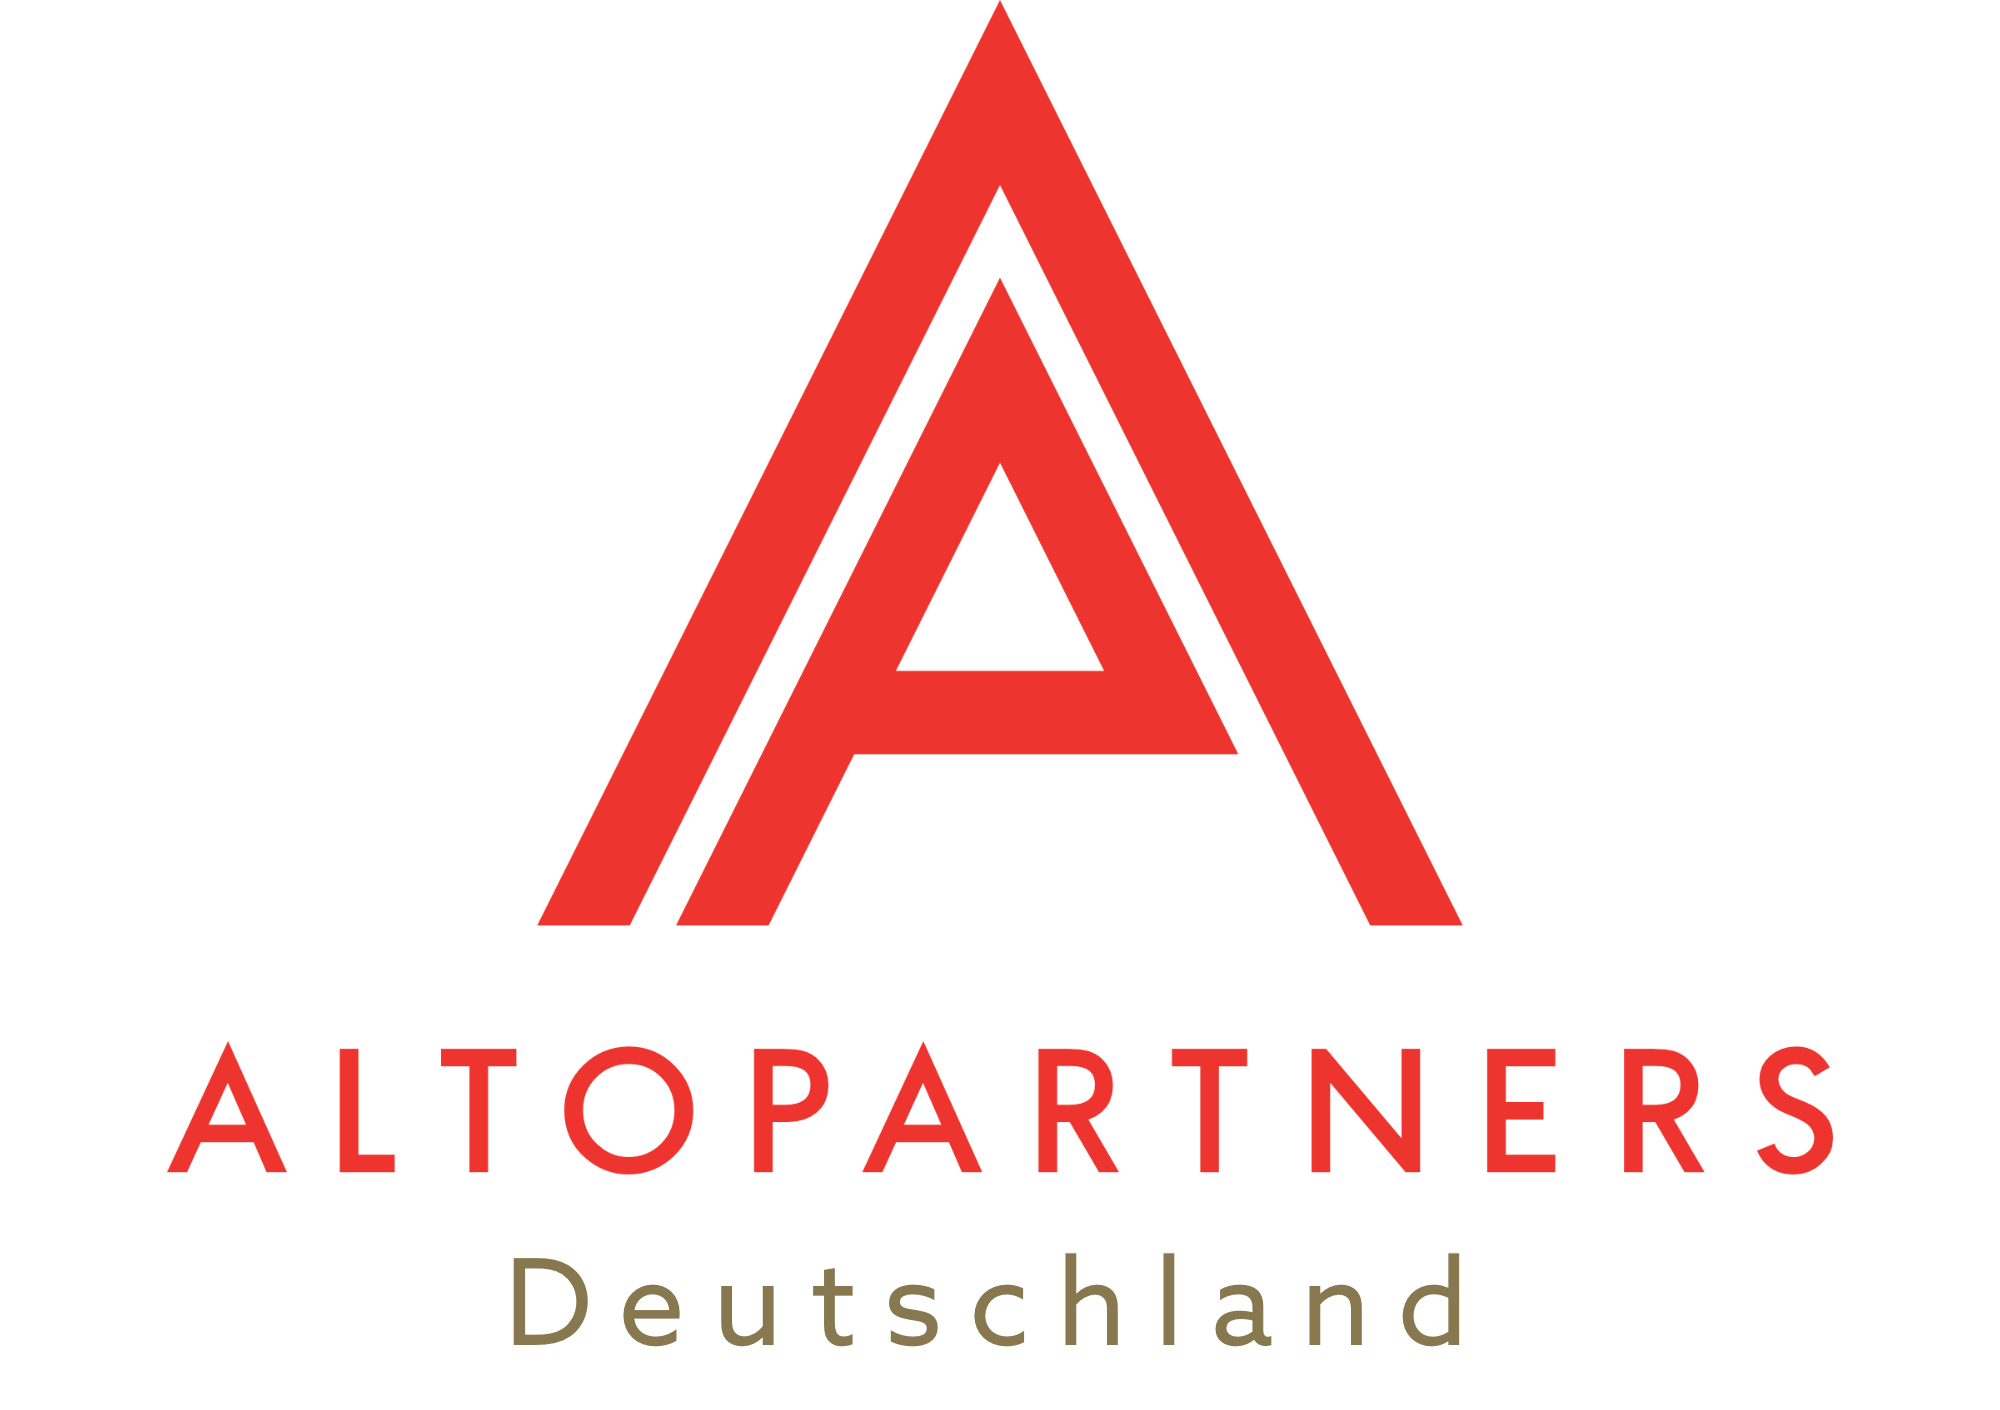 AltoPartners Deutschland / AltoPartners